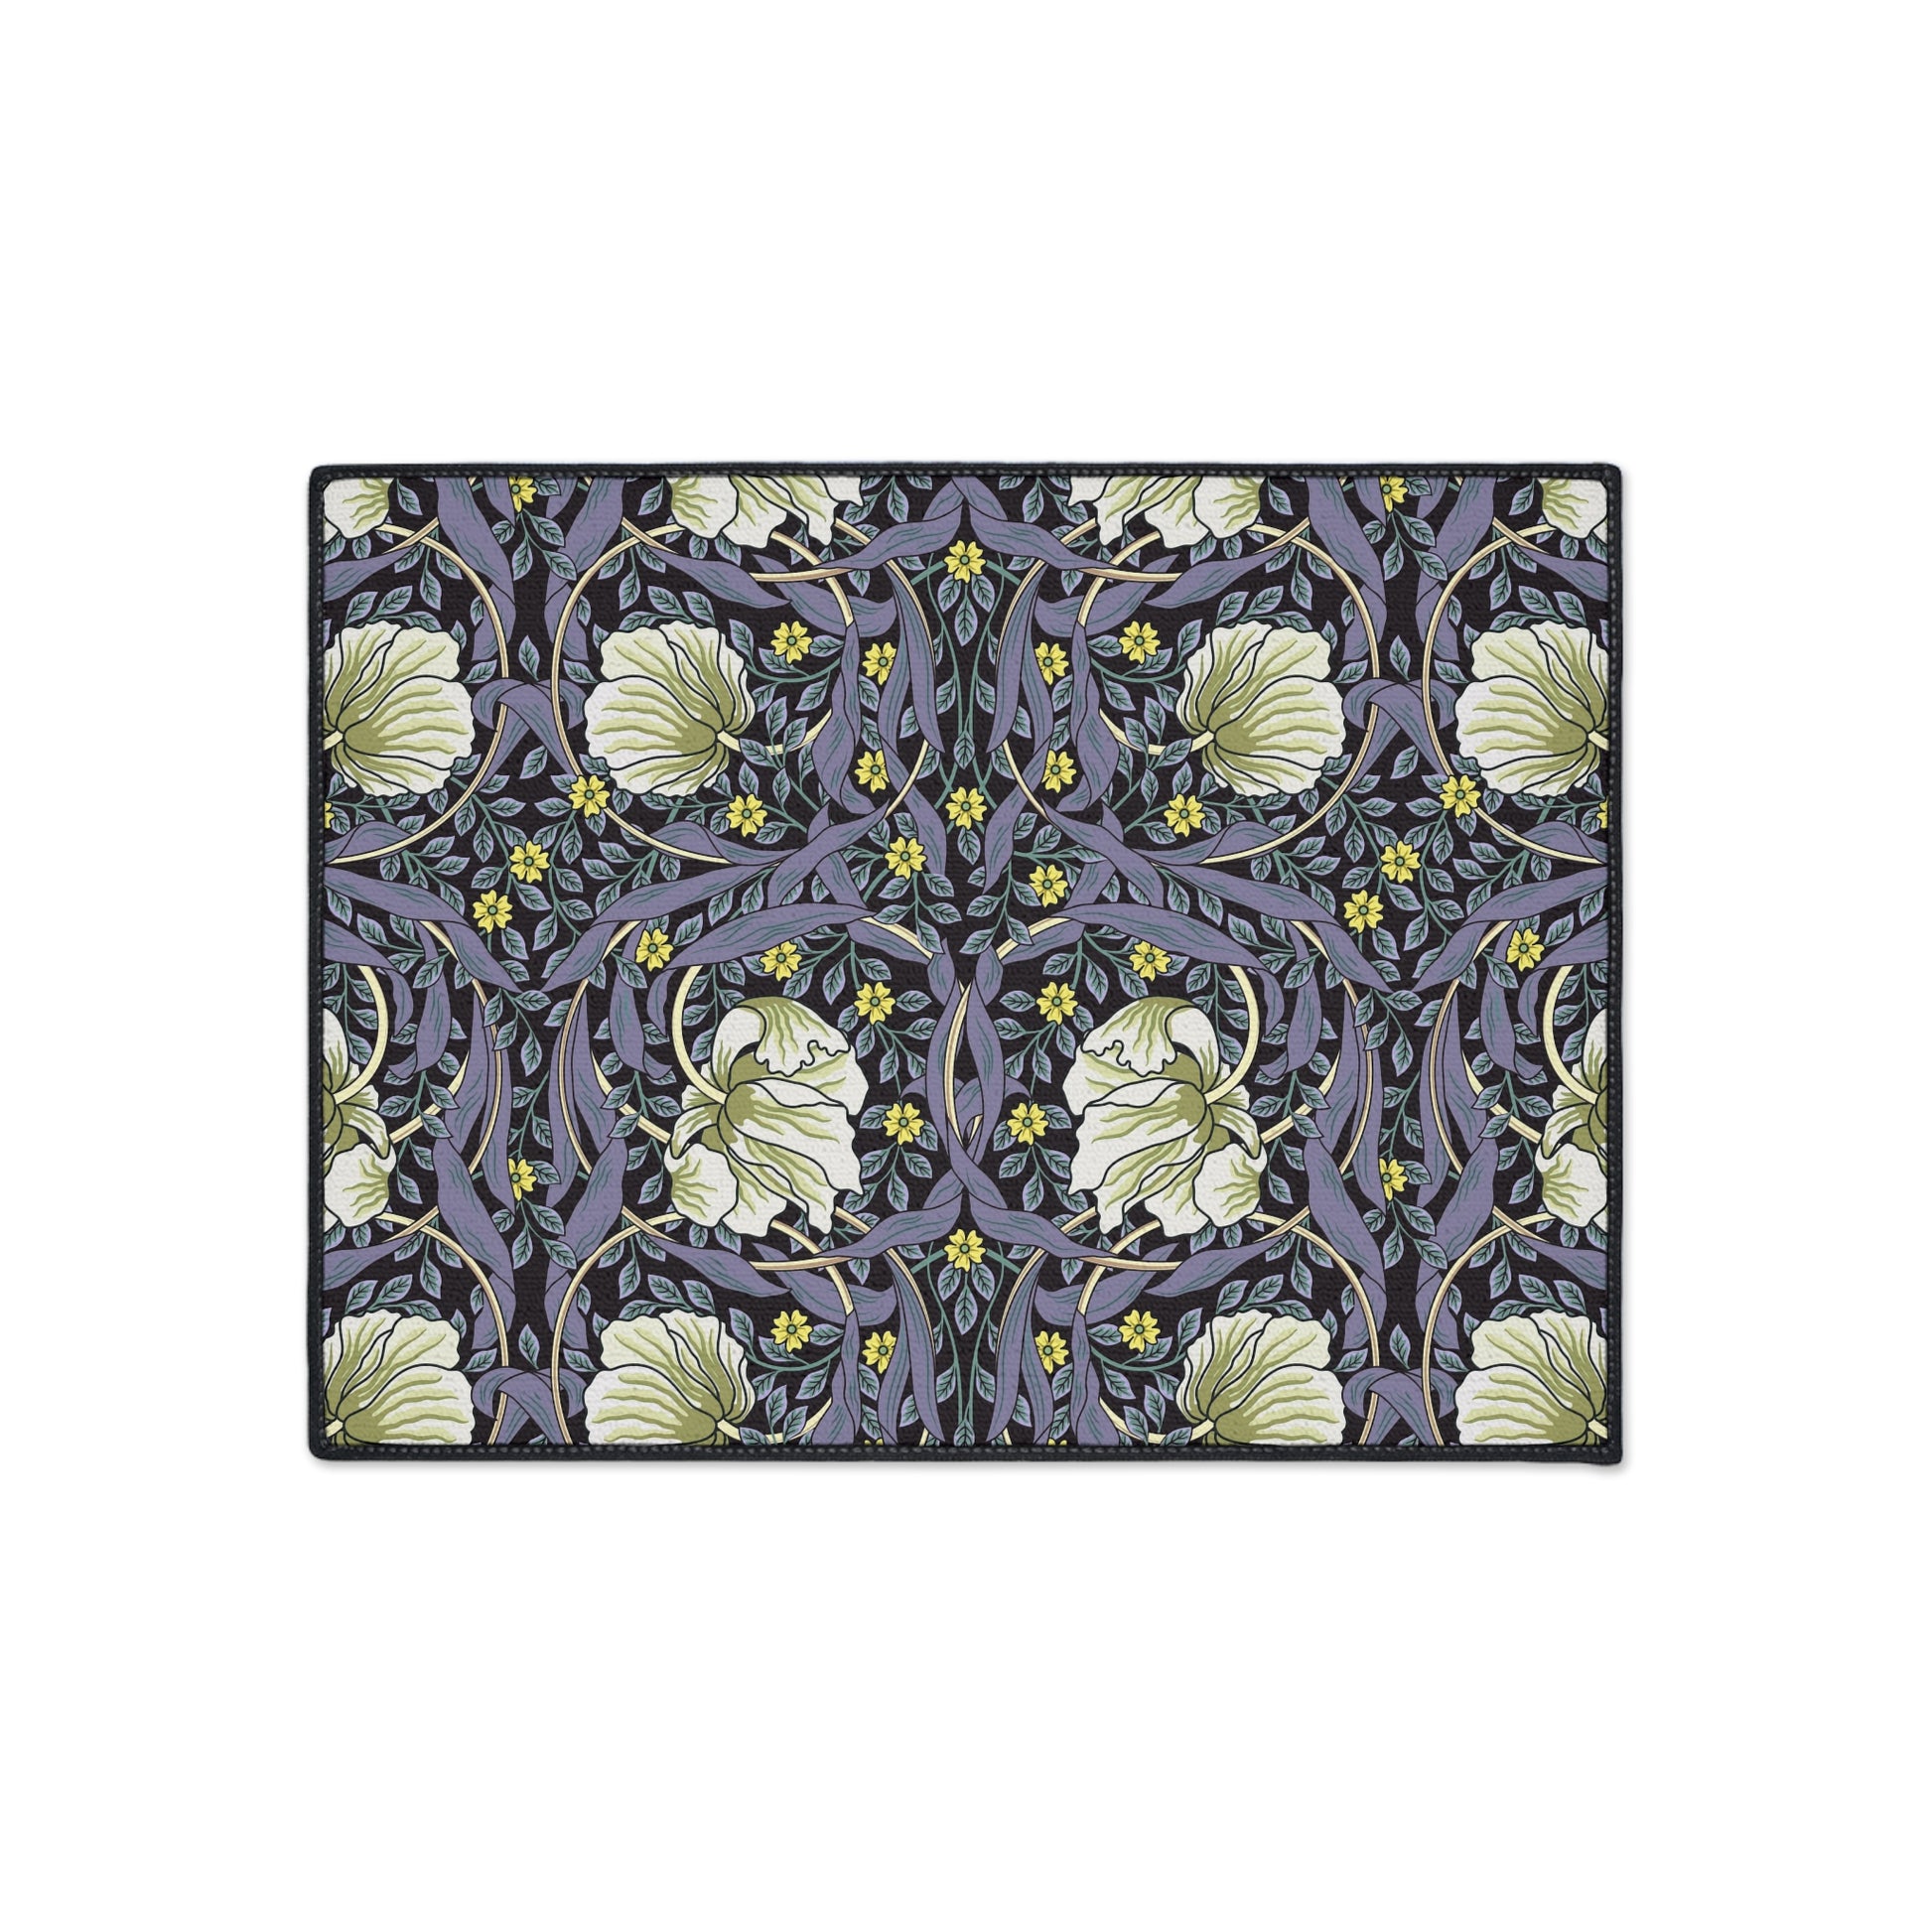 william-morris-co-heavy-duty-floor-mat-floor-mat-pimpernel-collection-lavender-5